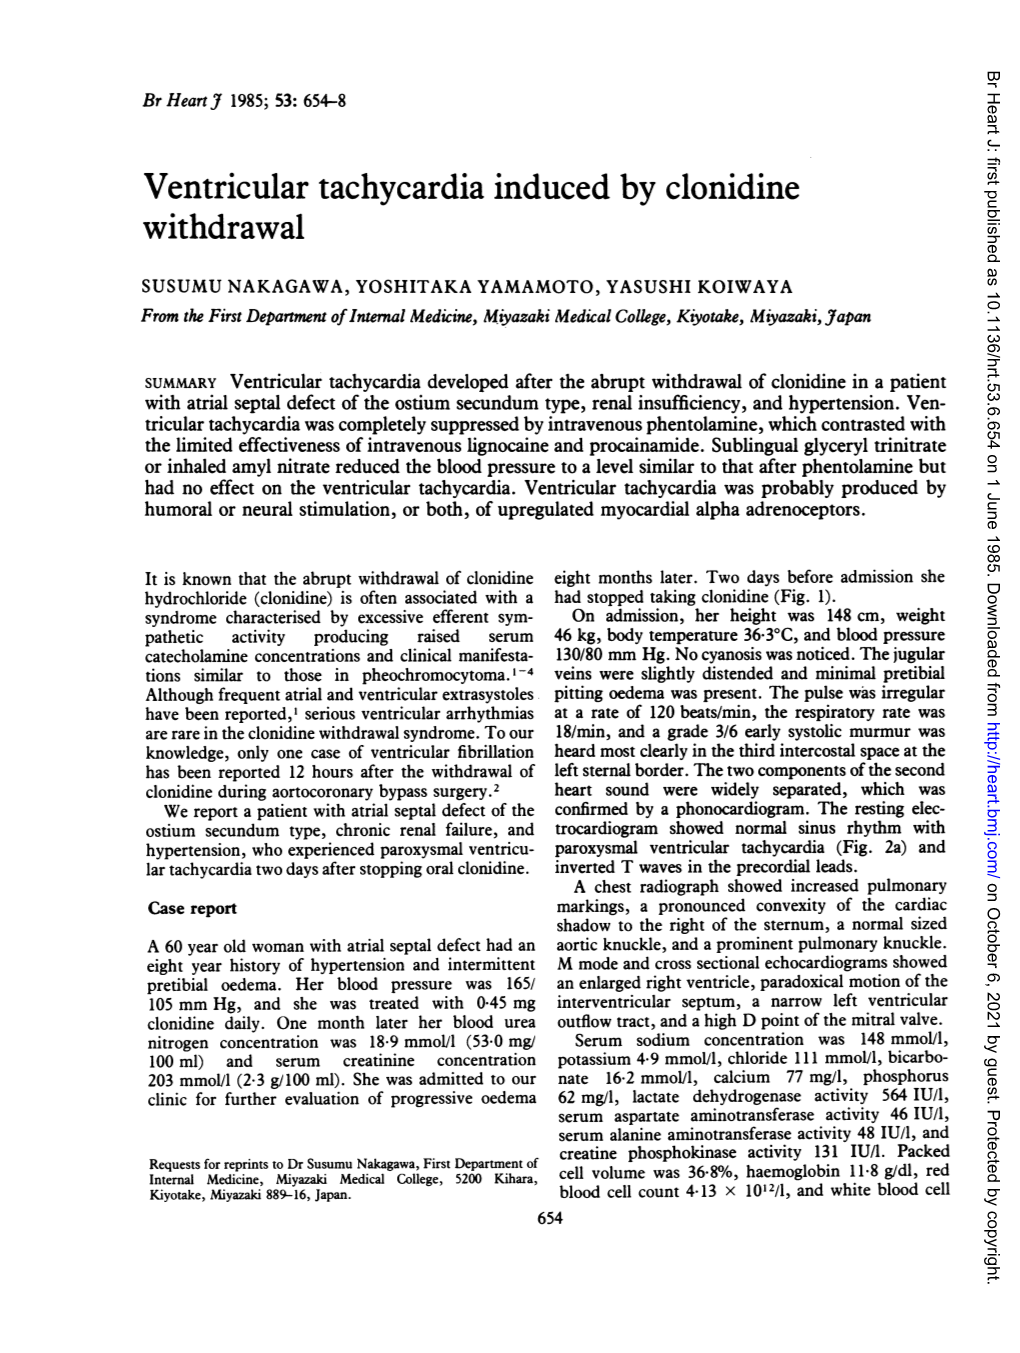 Ventricular Tachycardia Induced by Clonidine Withdrawal